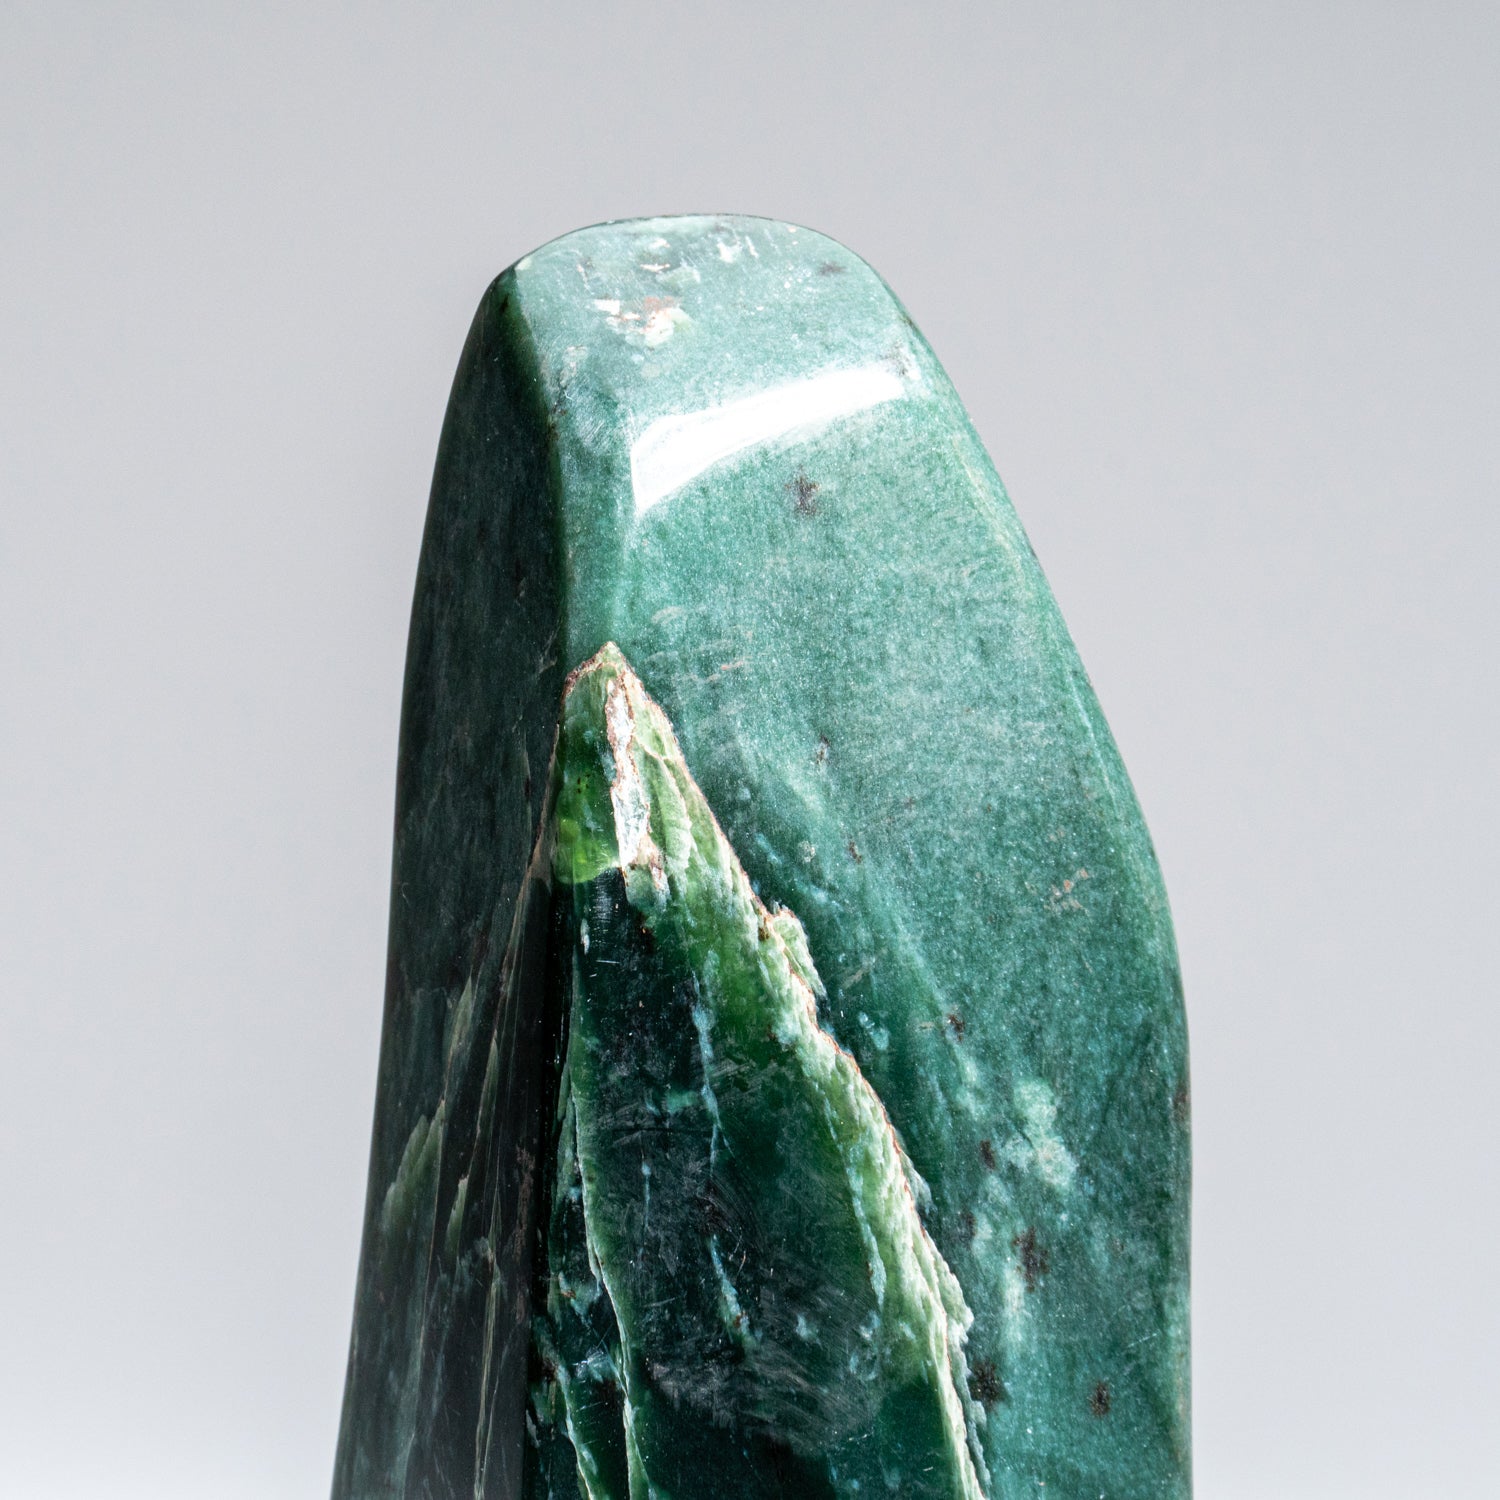 Polished Nephrite Jade Freeform from Pakistan (1.3 lbs)